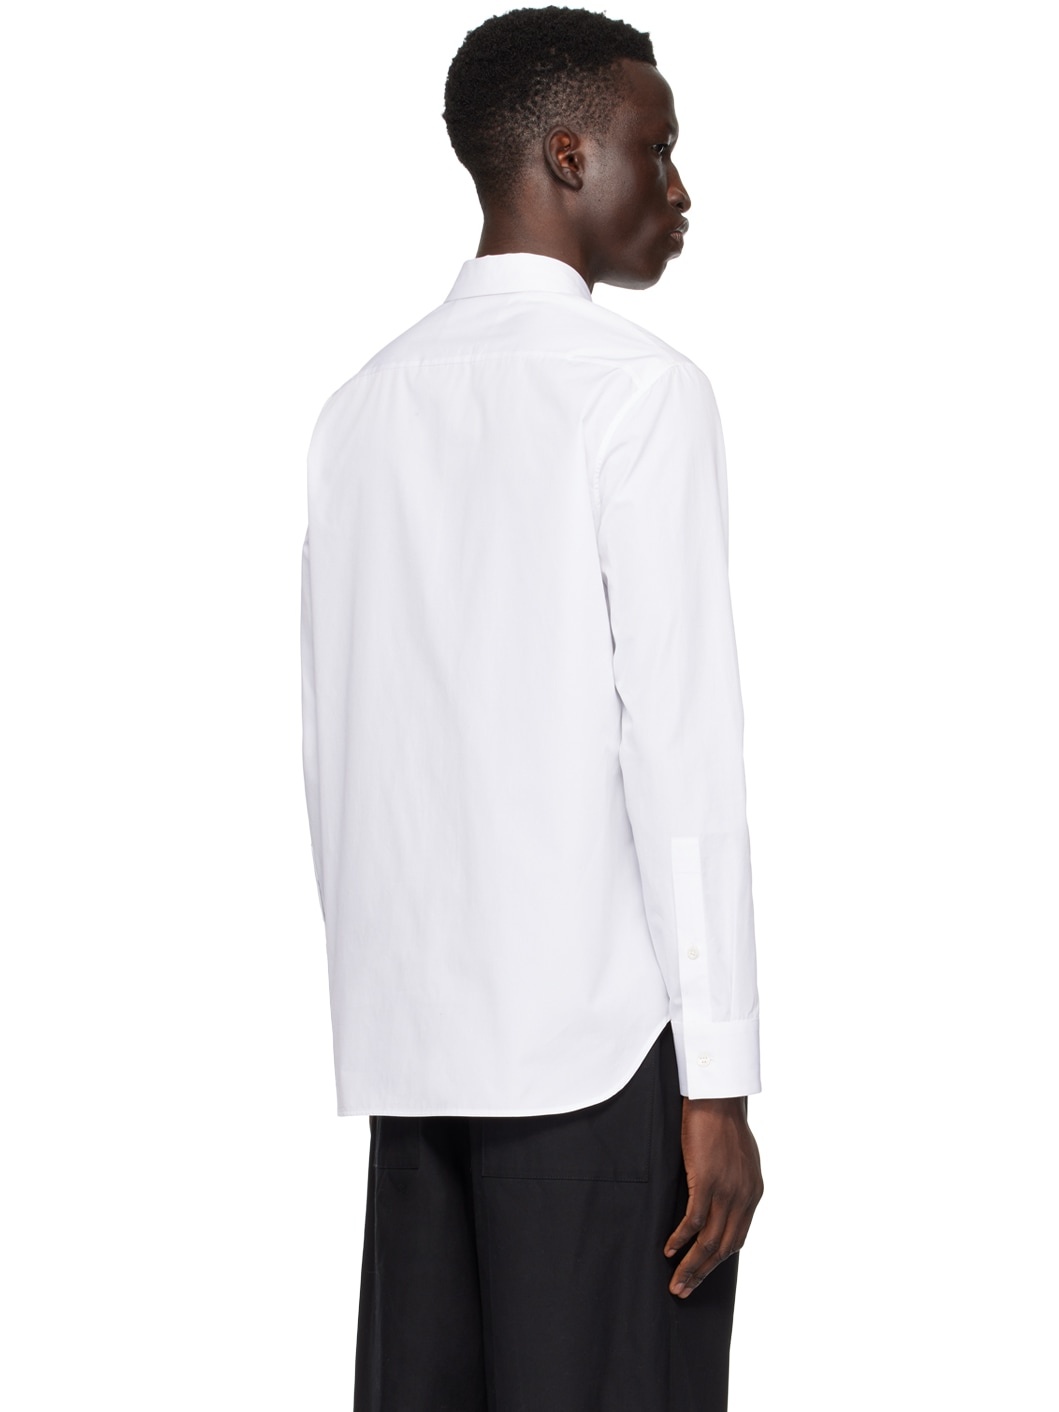 White Spread Collar Shirt - 3